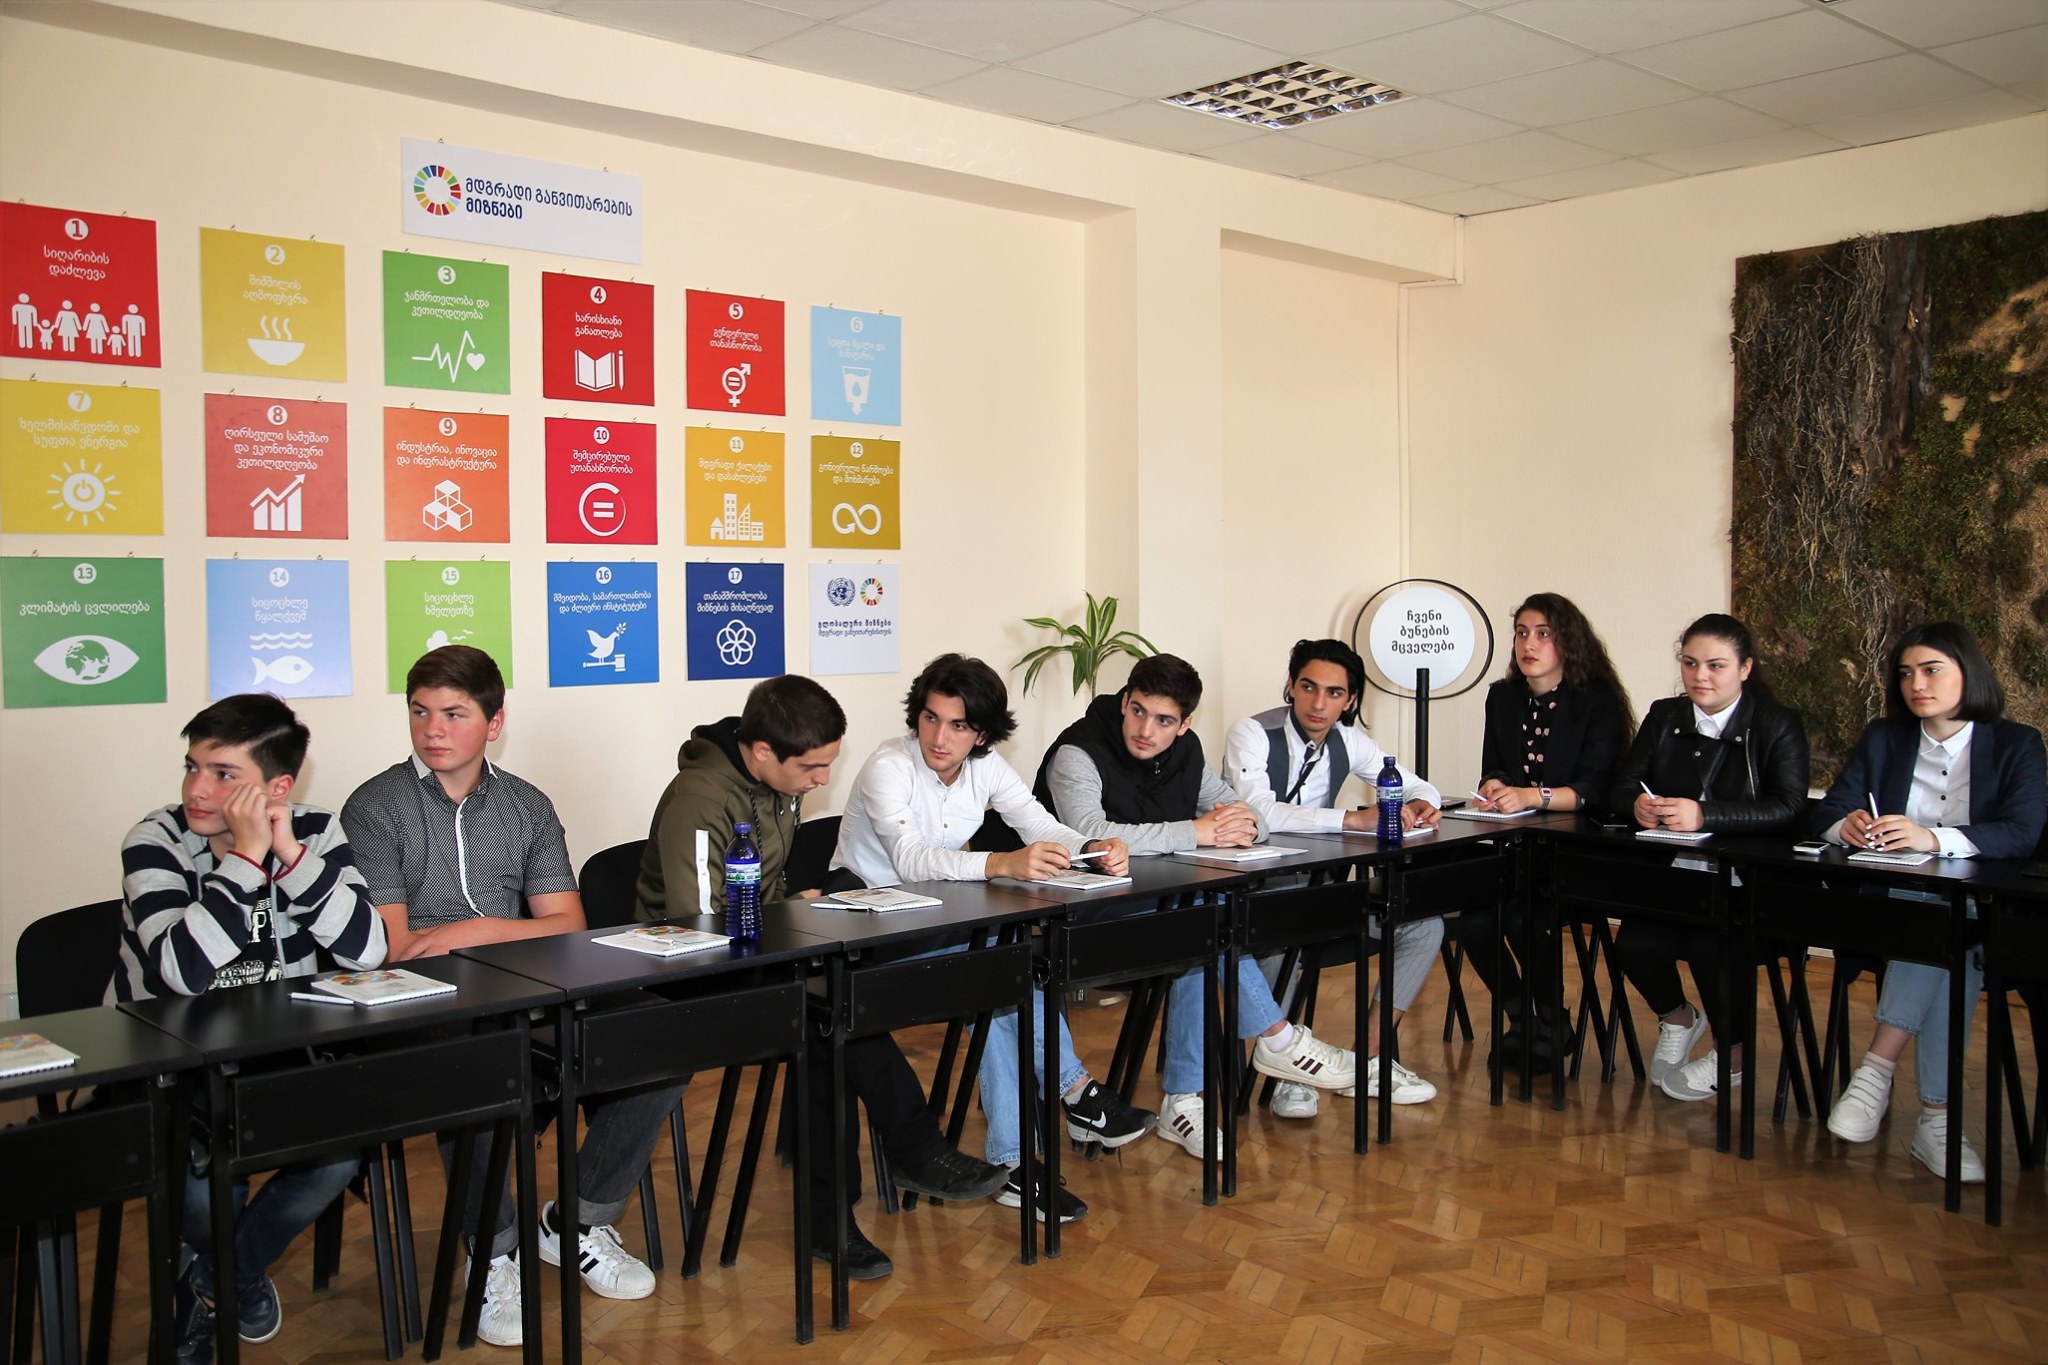 The Borjomi youth centre representatives visited the centre